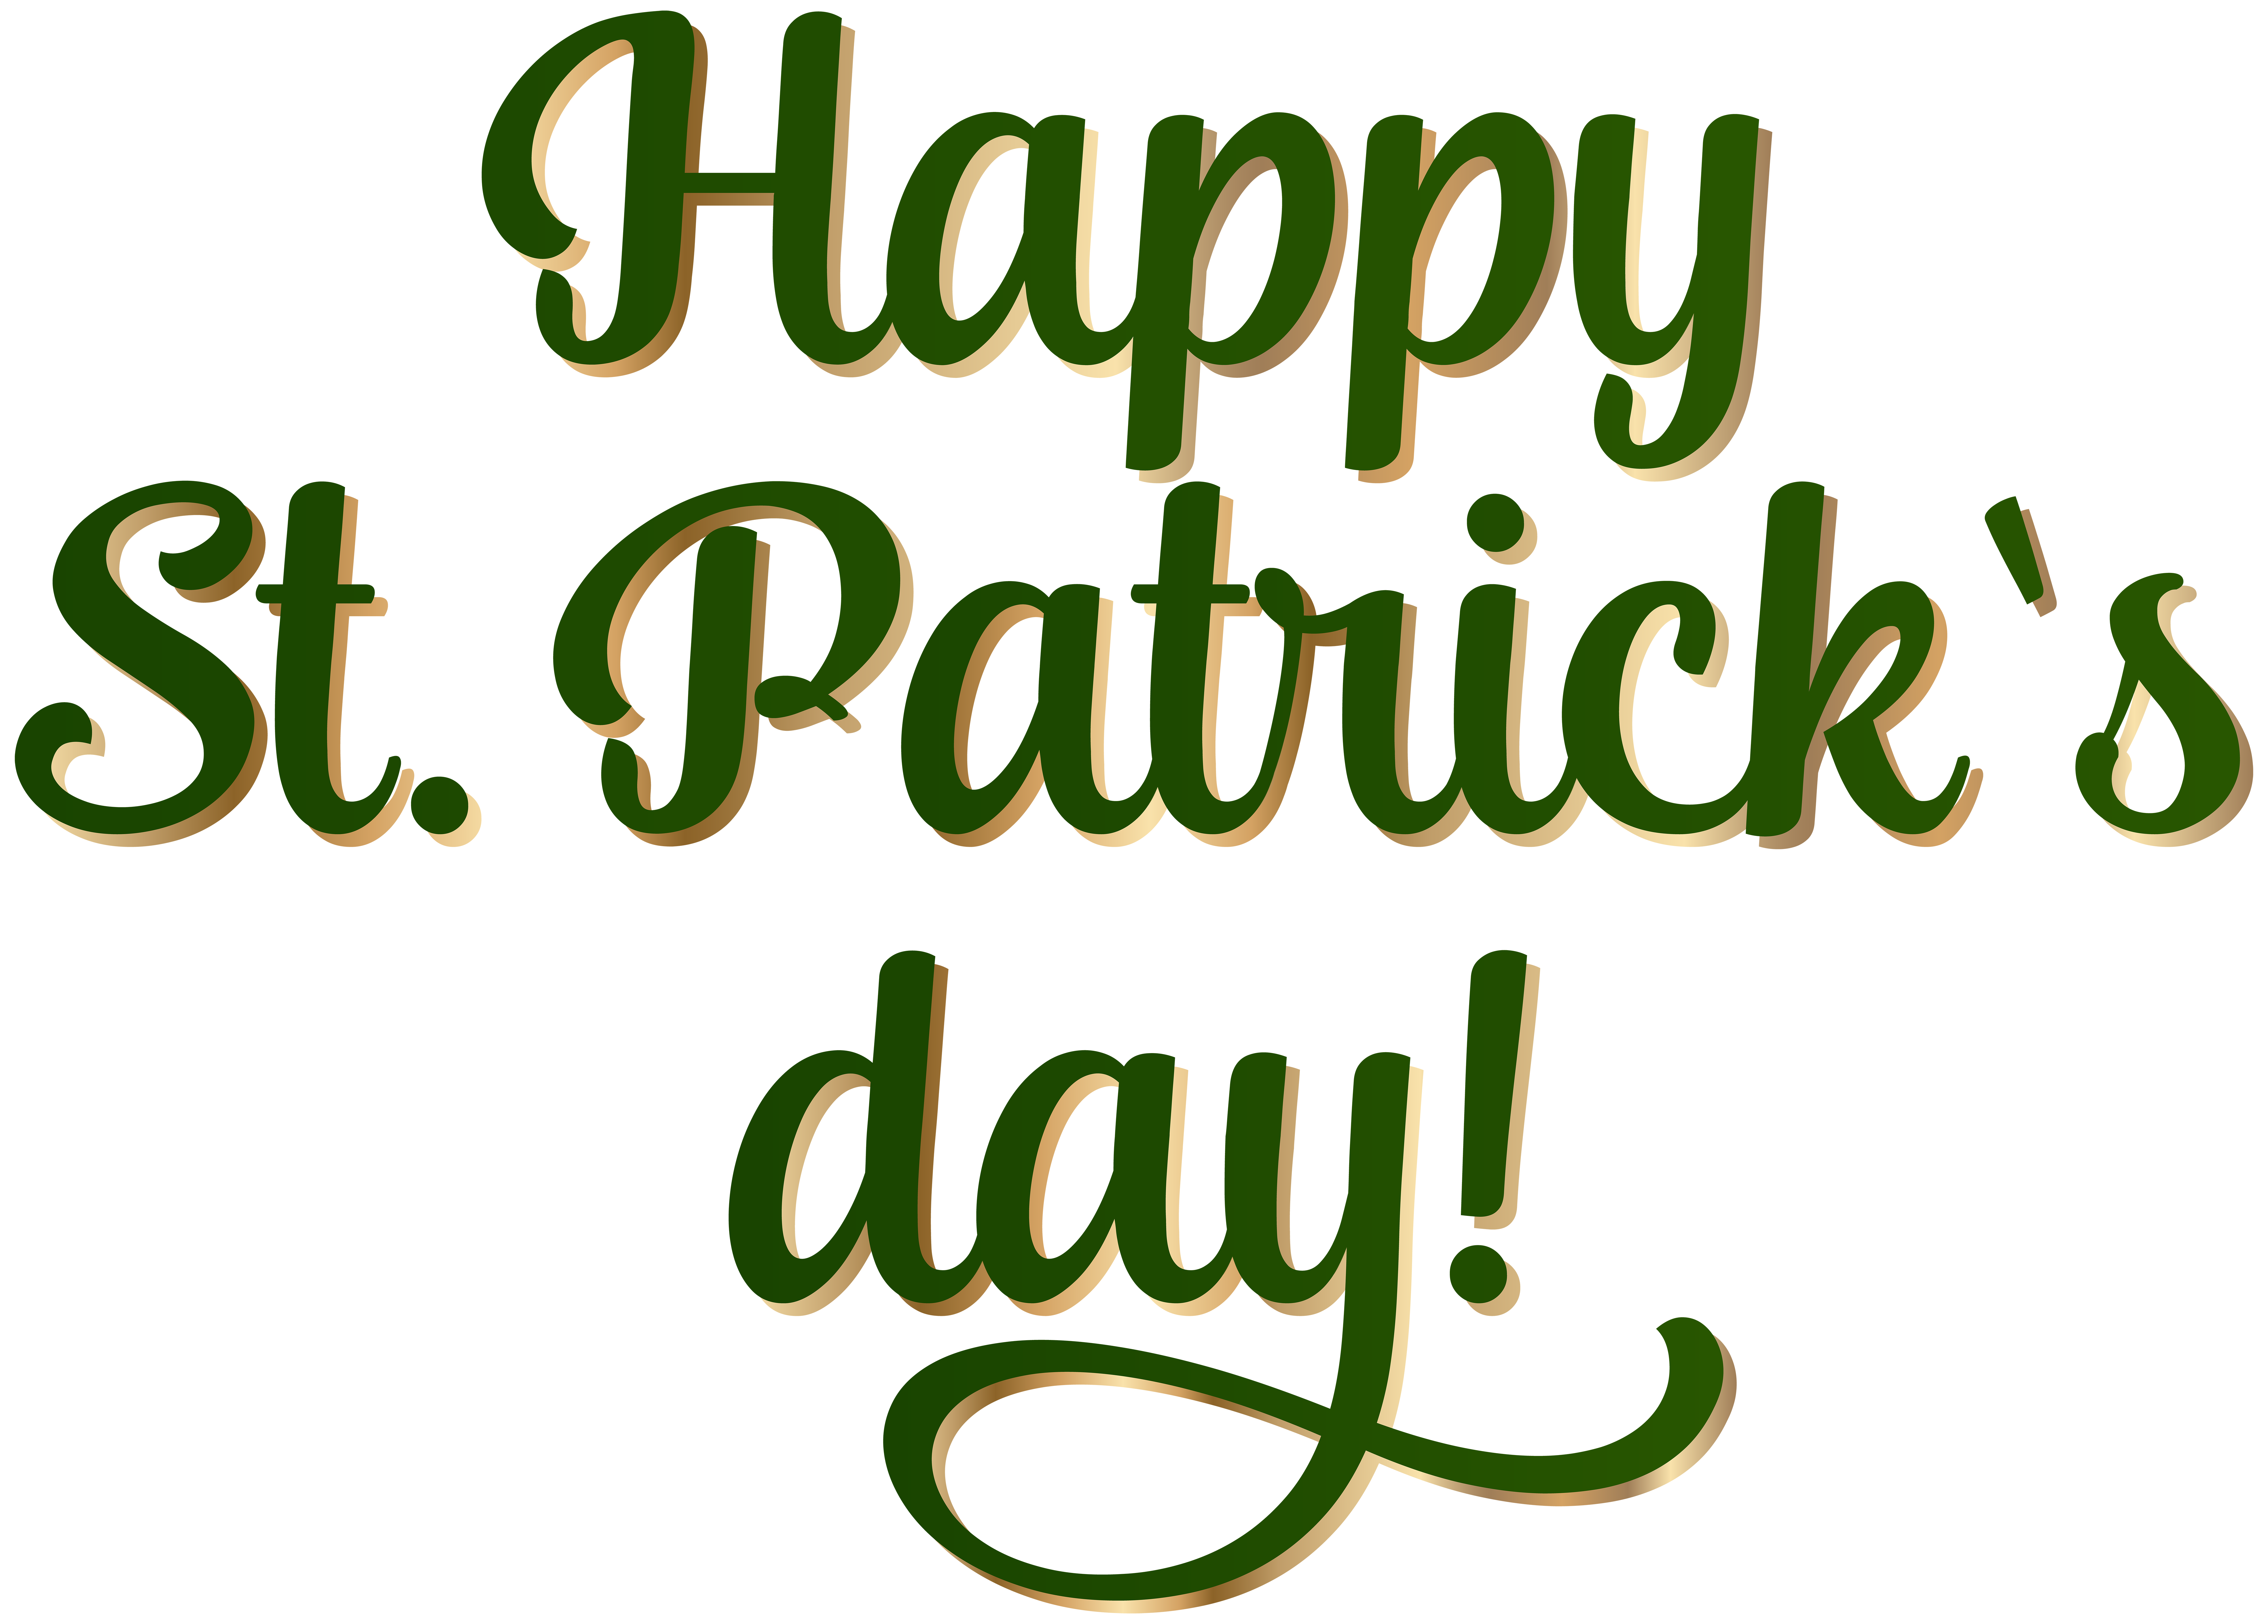 Happy patrick s day. Happy St Patrick's Day. Надпись St Patrick. St Patrick's Day надпись. St Patrick's Day лого.